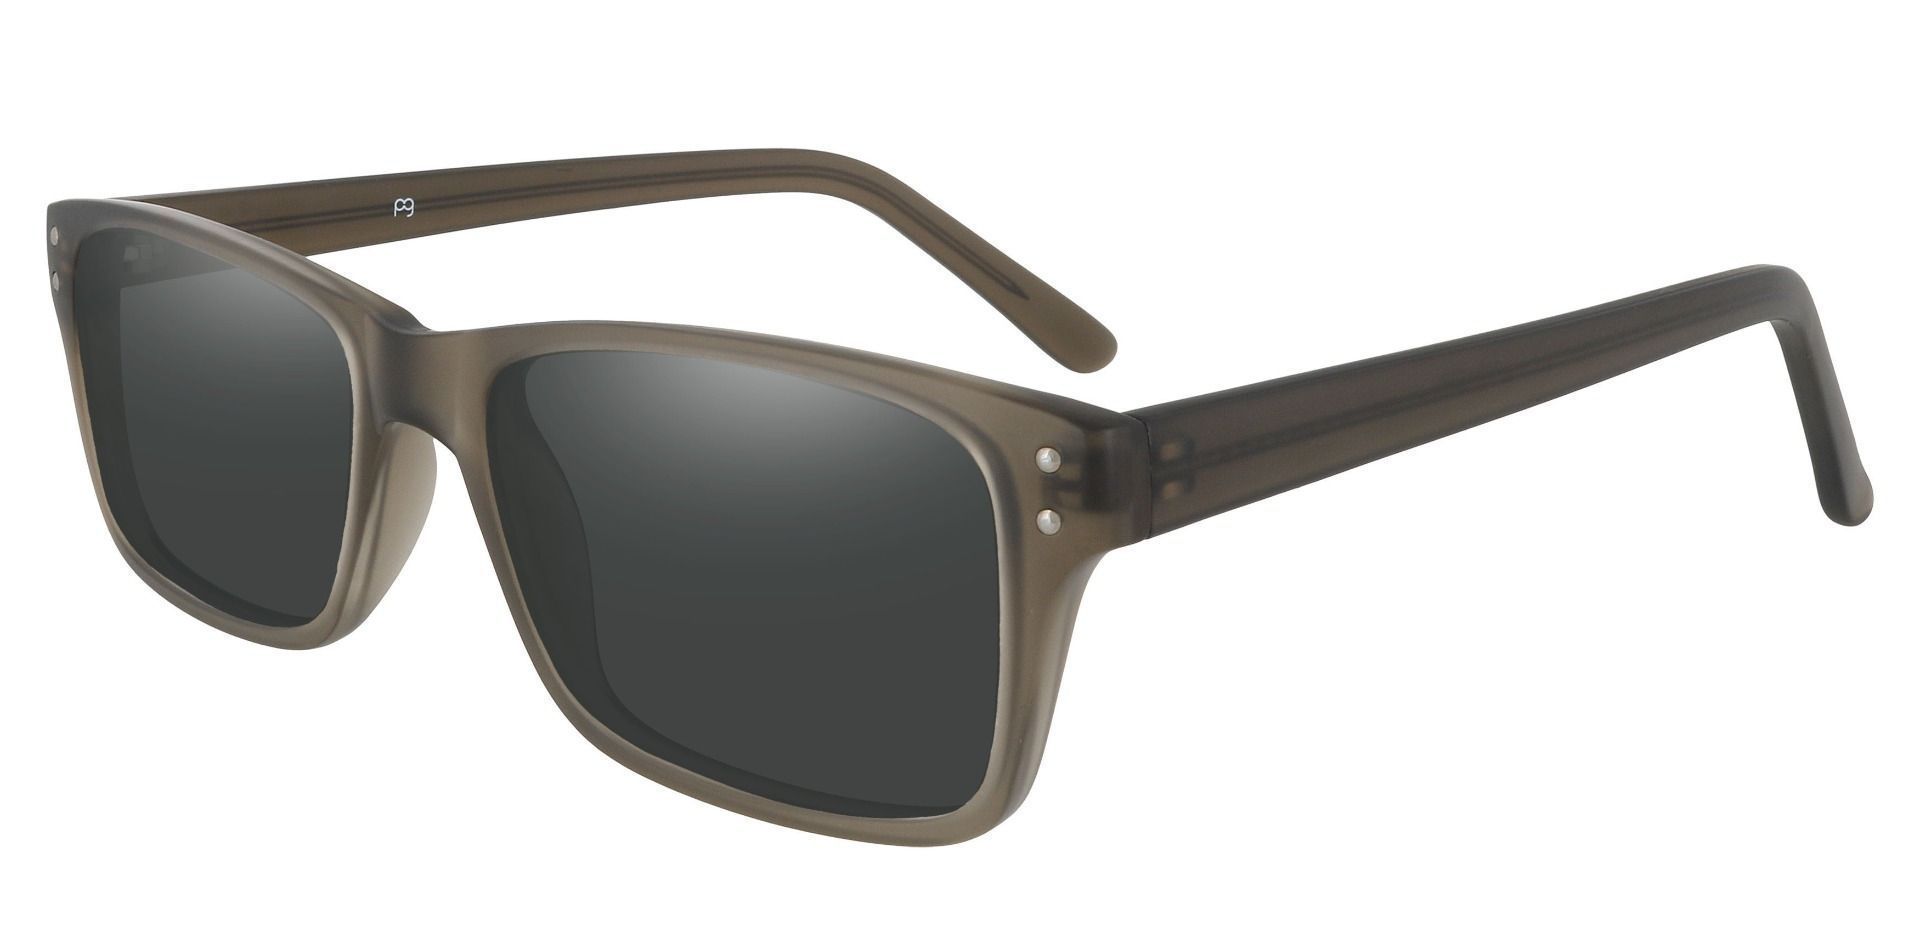 Fabian Rectangle Prescription Sunglasses - Gray Frame With Gray Lenses